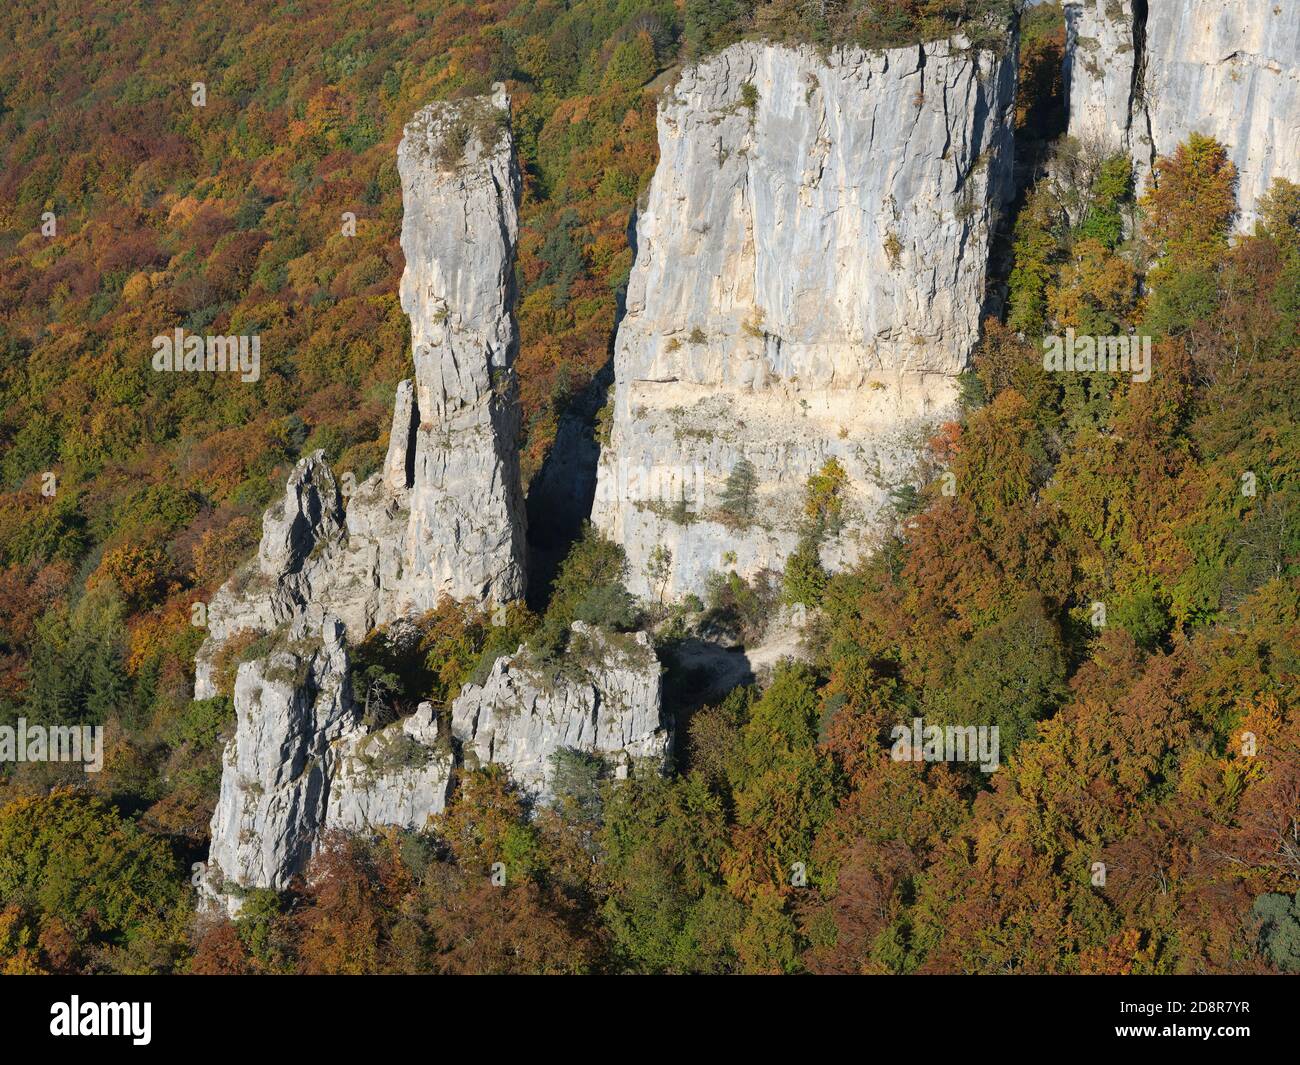 AERIAL VIEW. Lofty limestone pinnacle overlooking an autumnal forest. Tours Saint-Jacques, Allèves, Haute-Savoie, Auvergne-Rhône-Alpes, France. Stock Photo